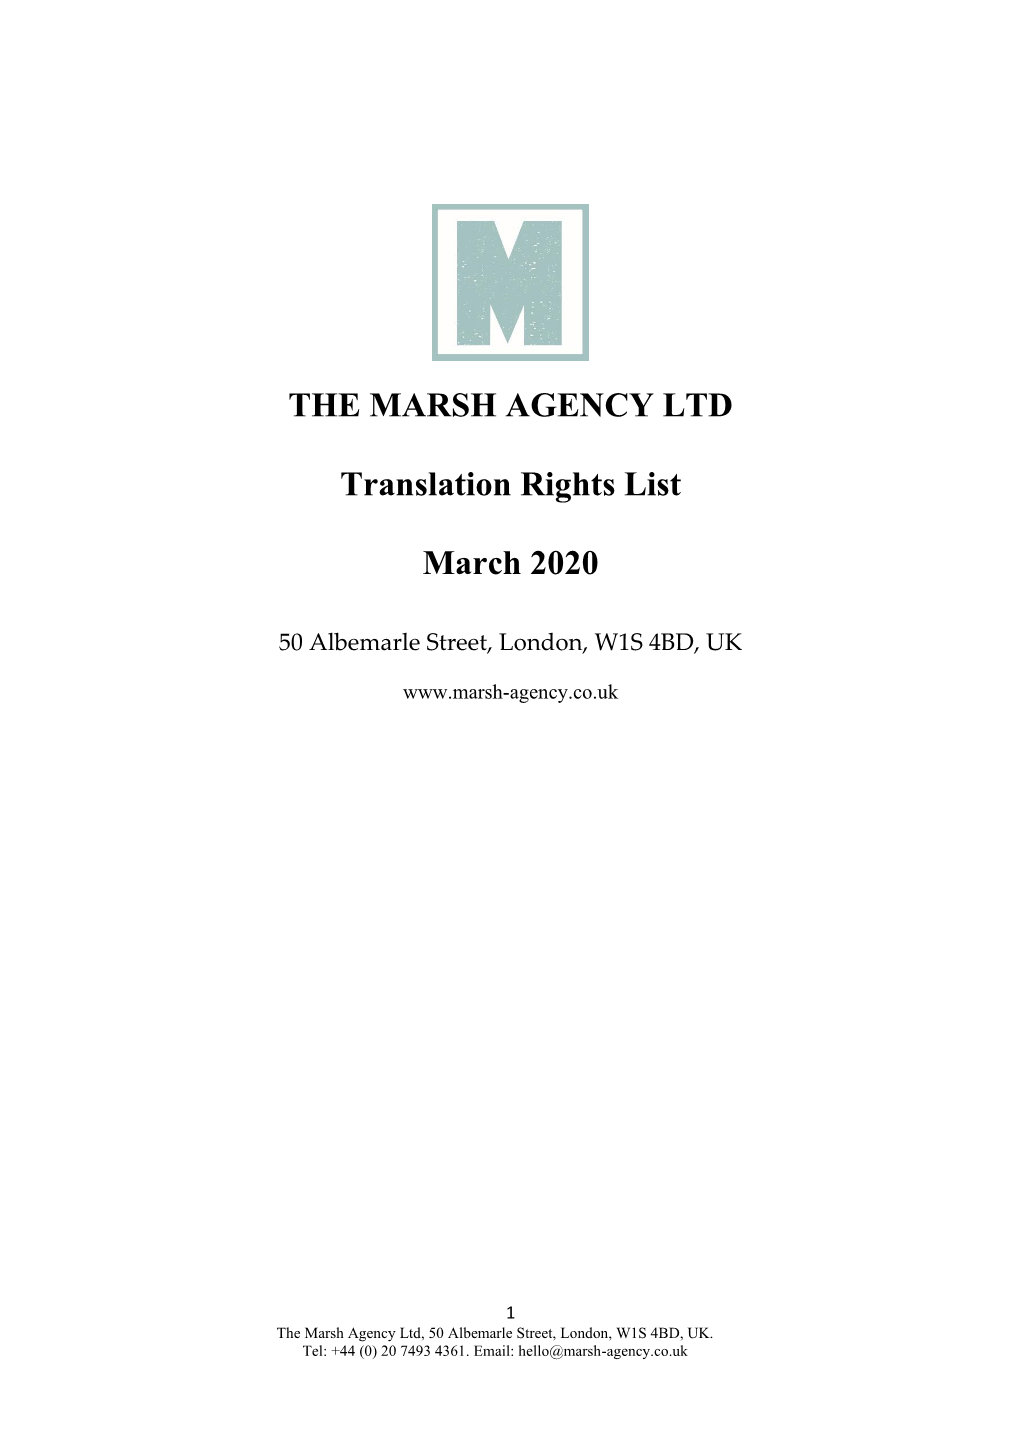 THE MARSH AGENCY LTD Translation Rights List March 2020